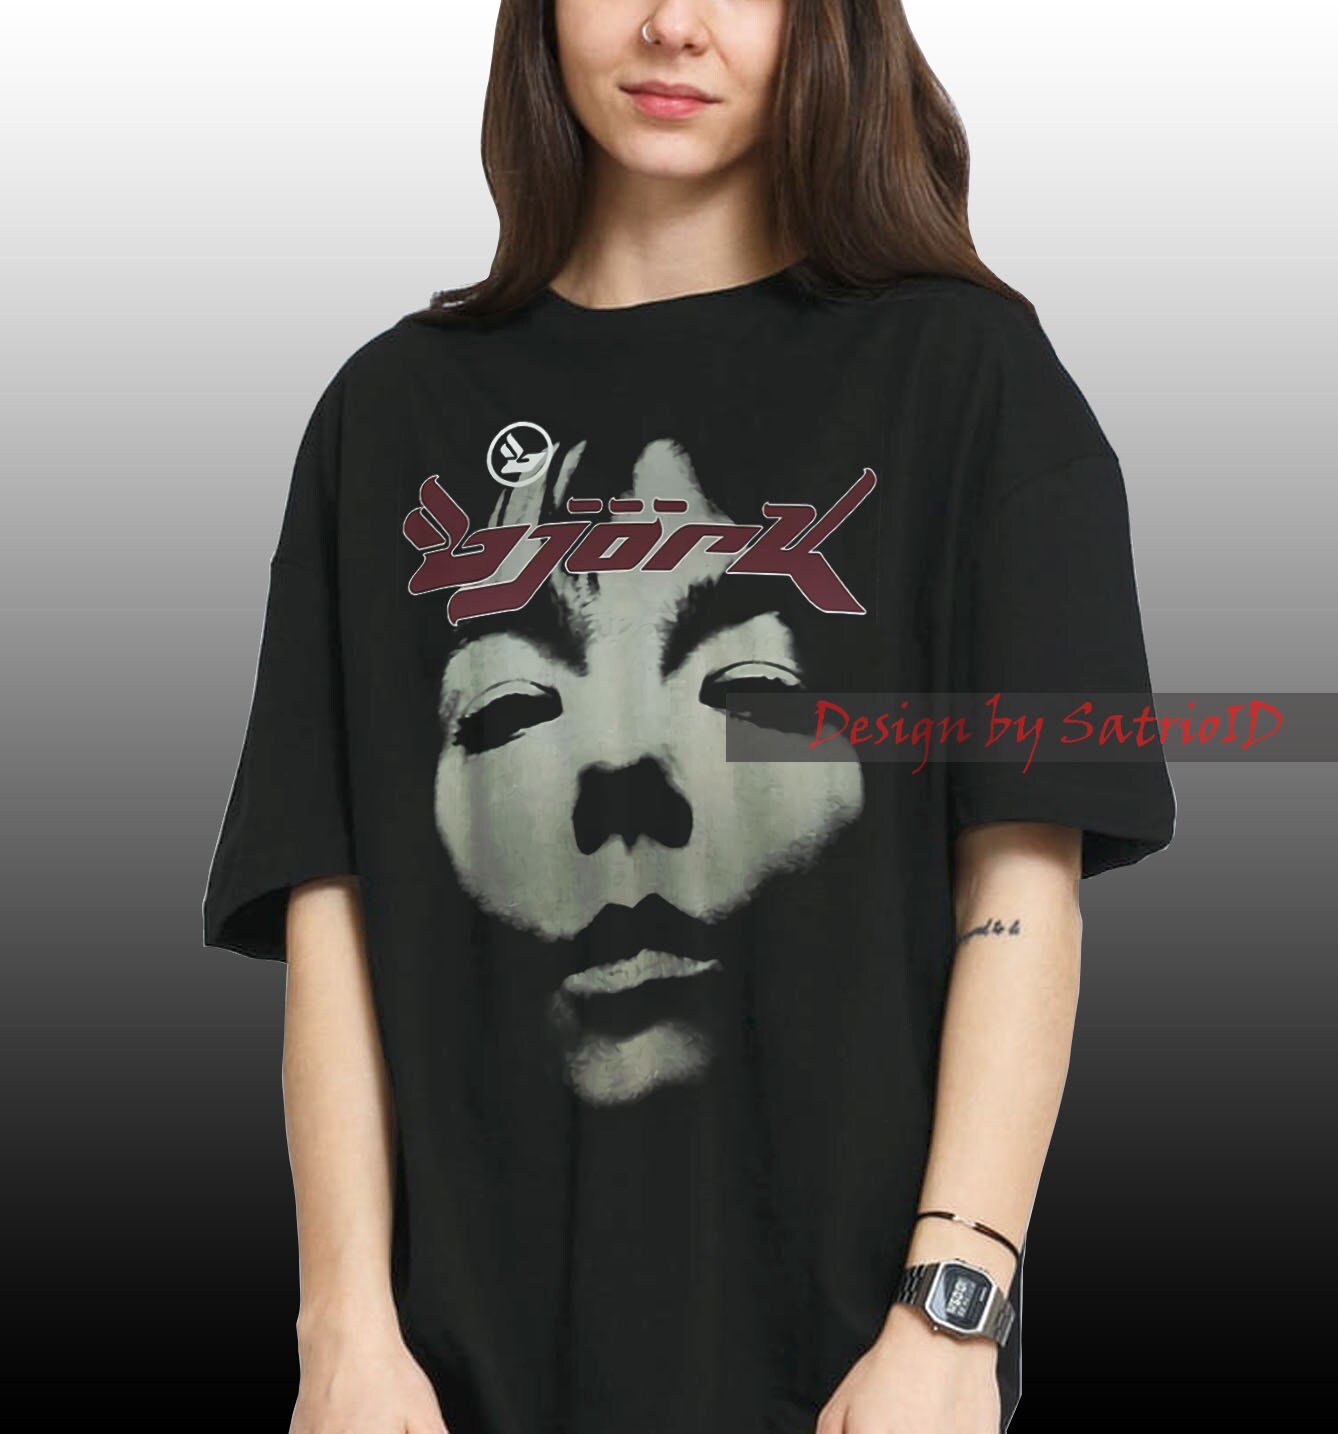 BJORK Shirt Billy Bjork Fan Shirt Graphic T-shirt RS-11 Etsy